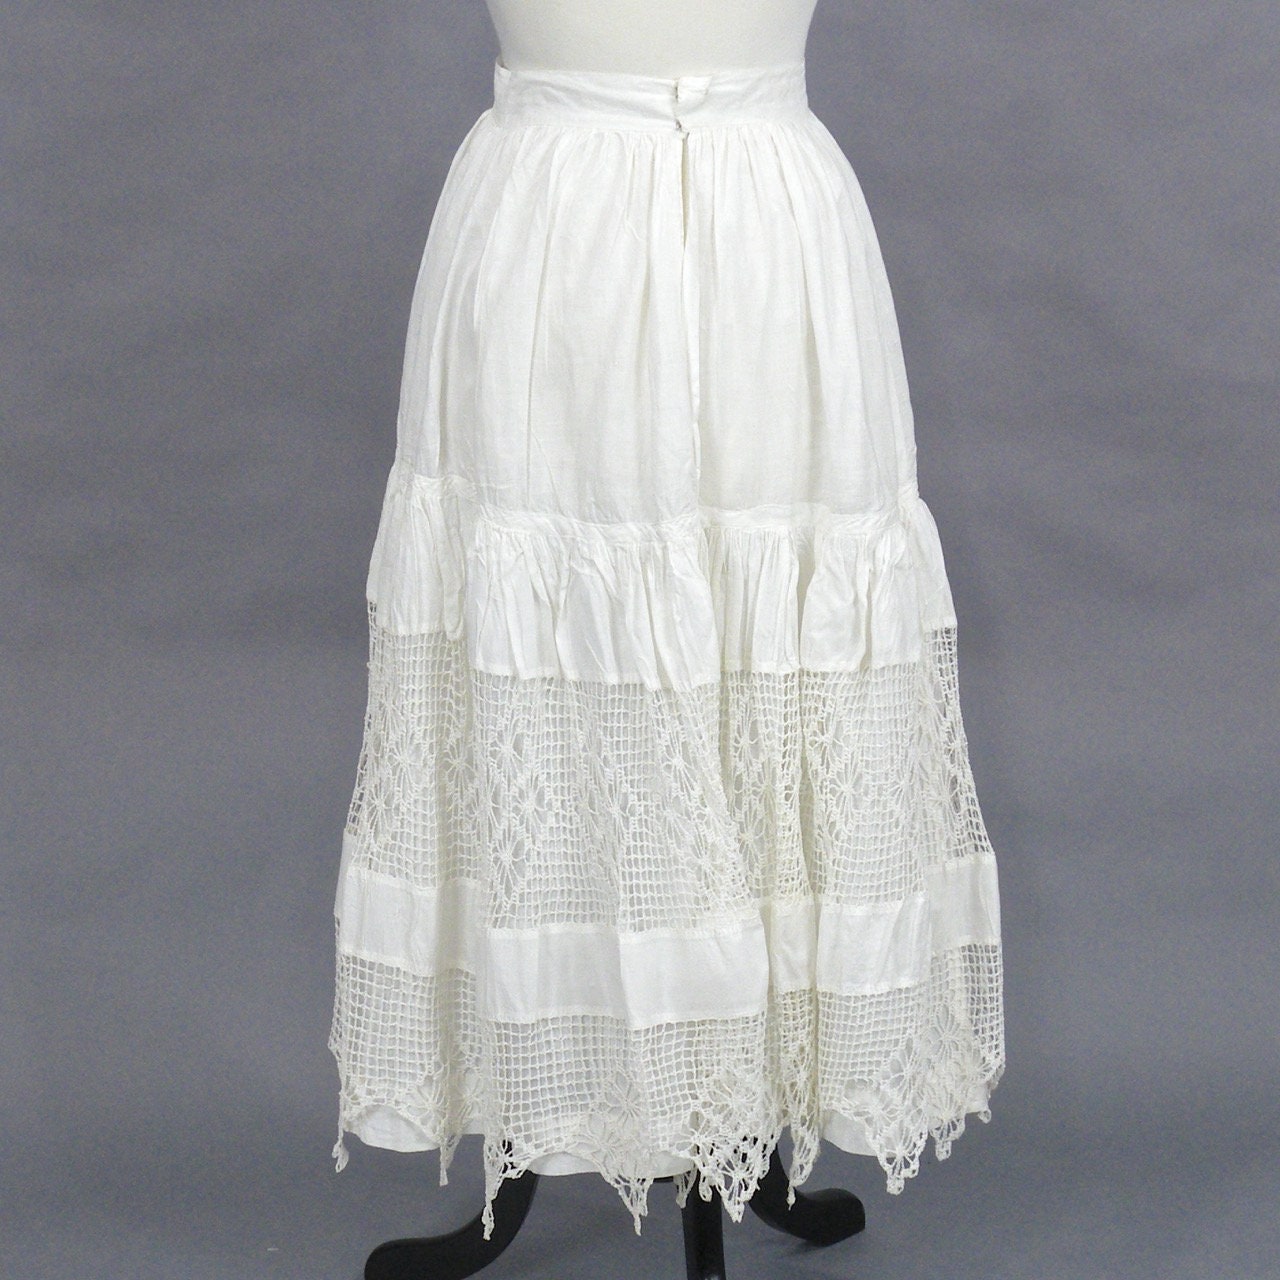 Edwardian Skirt, 1900s 1910s White Cotton Crochet Lace Skirt, Antique ...